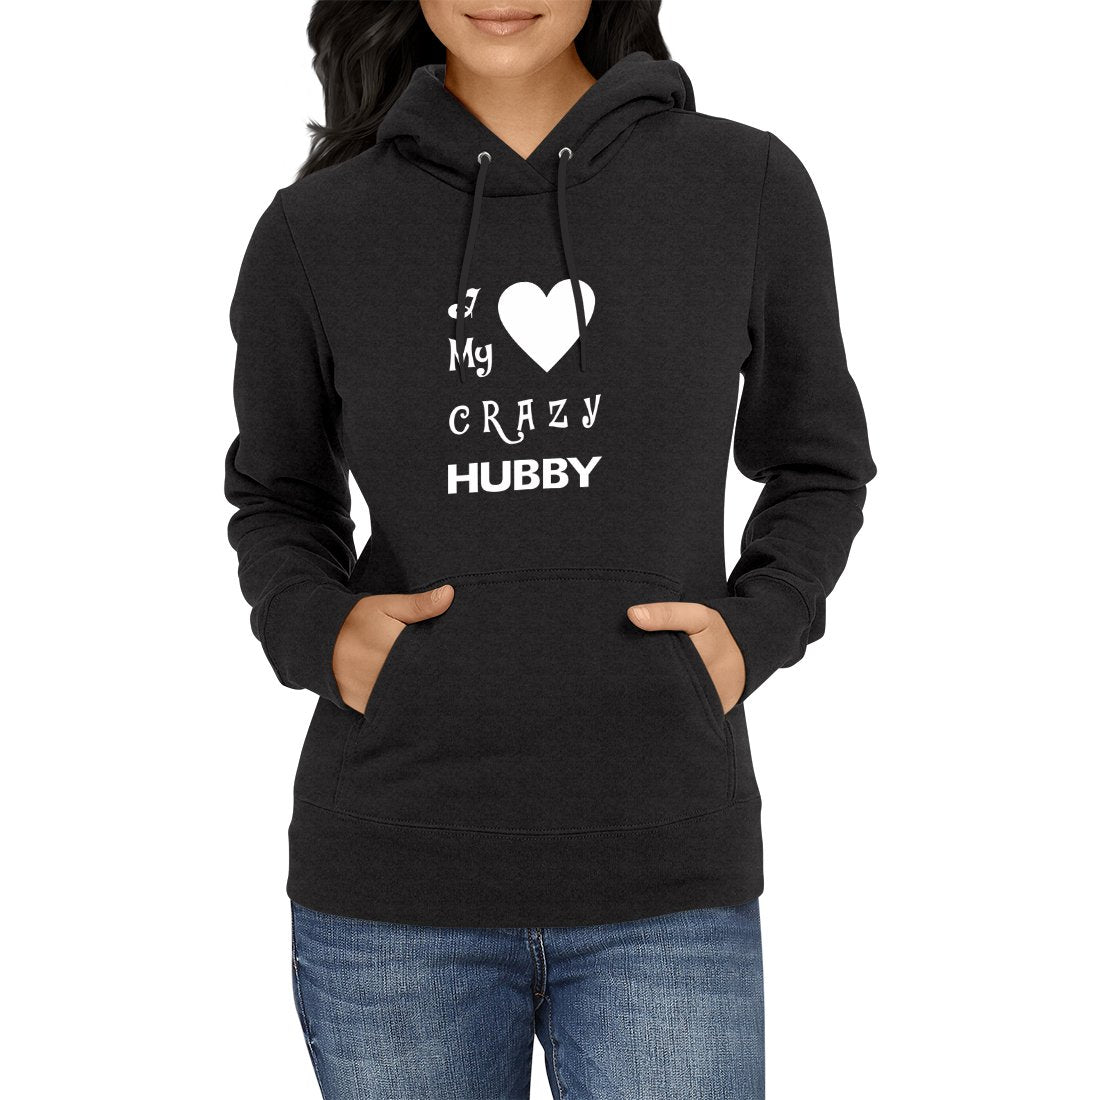 Crazy hubby / Crazy wifey Matching Couple Cute Sweatshirts | Couple Hoodies- Black